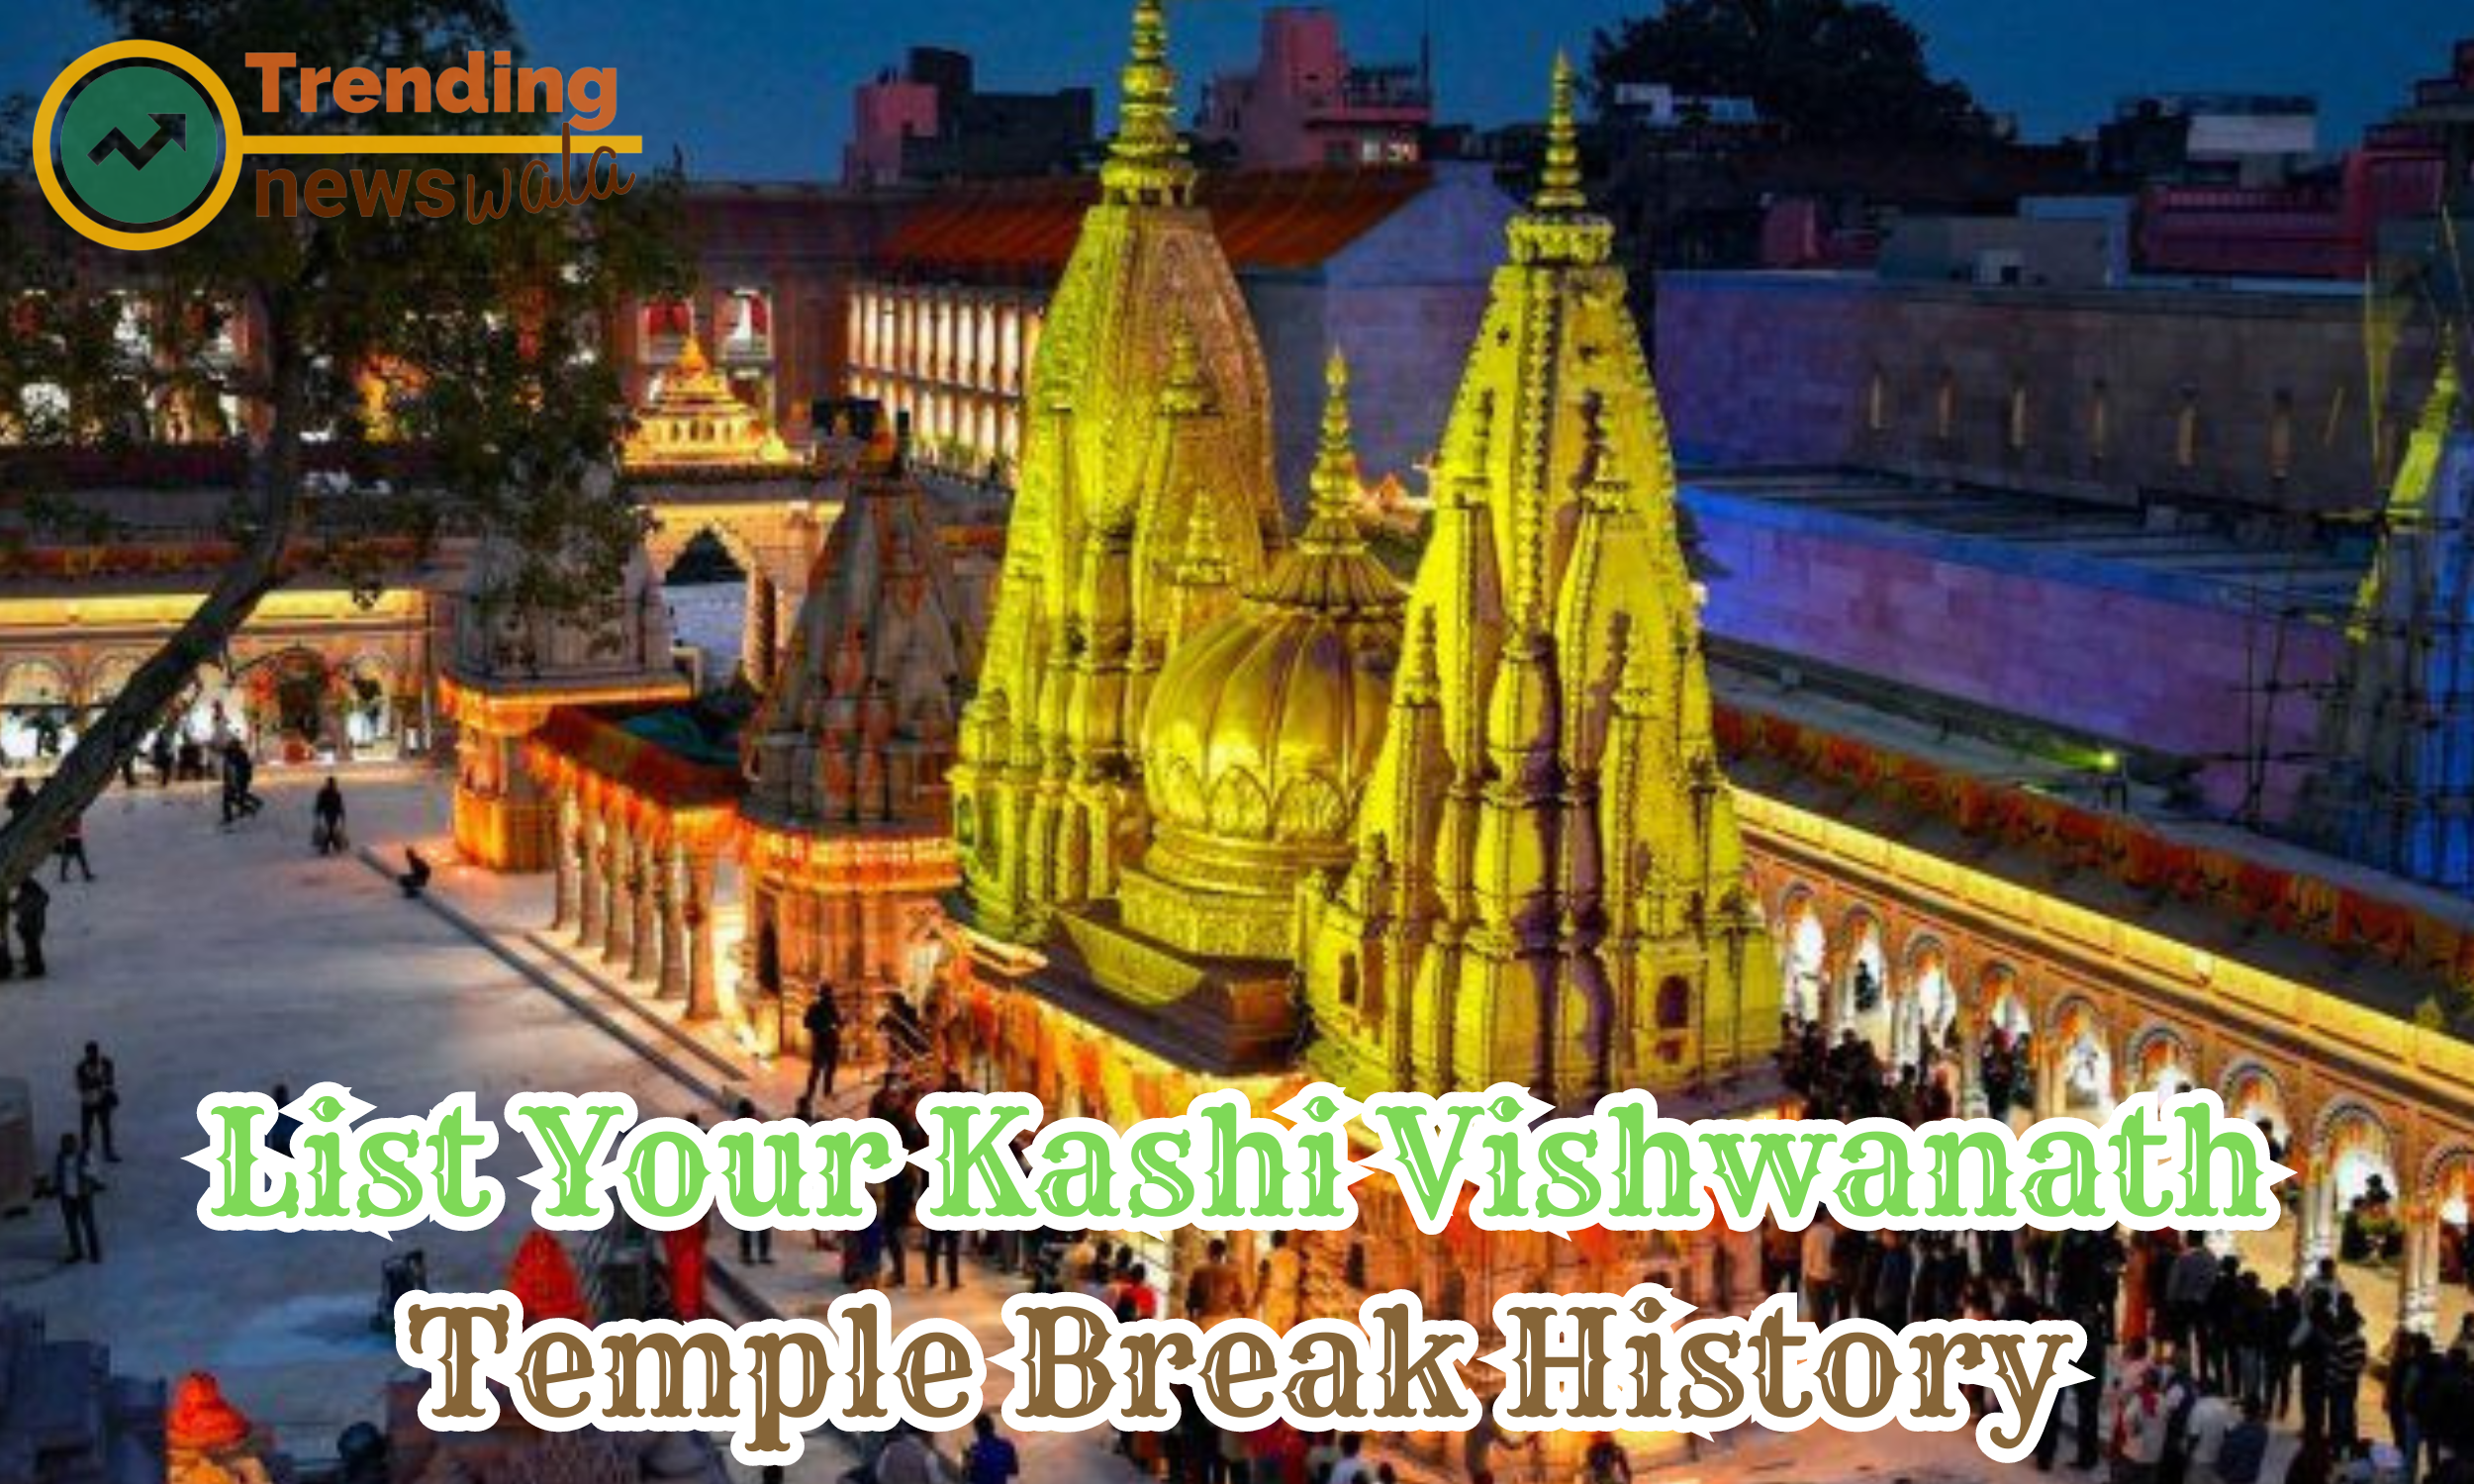 List Your Kashi Vishwanath Temple Break History